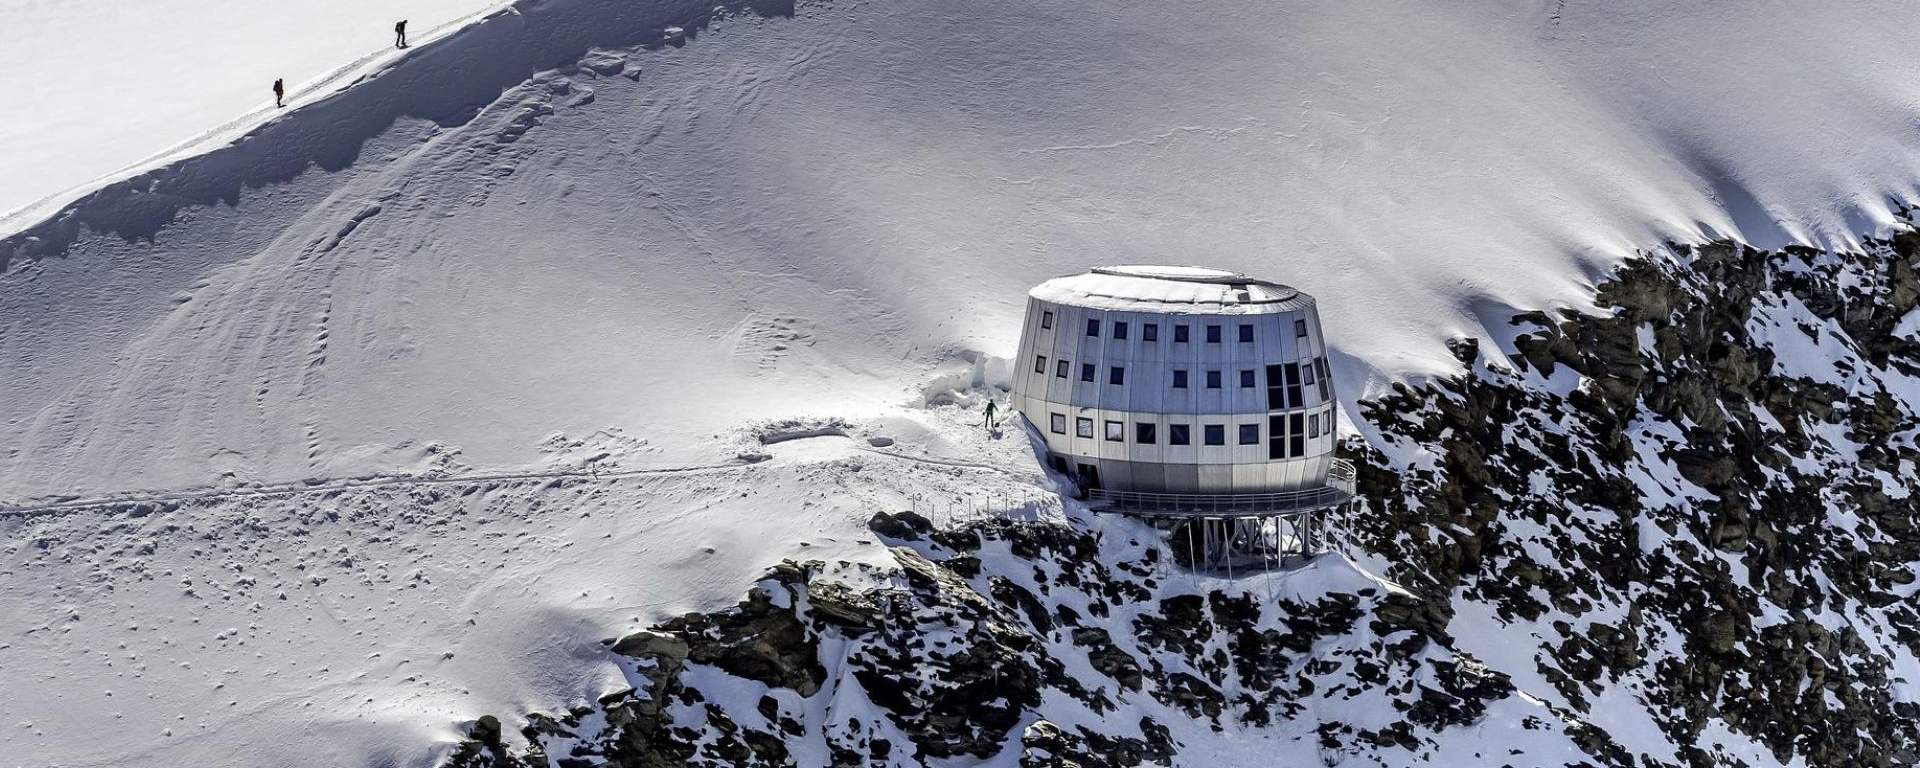 Schronisko Goûter na Mont Blanc